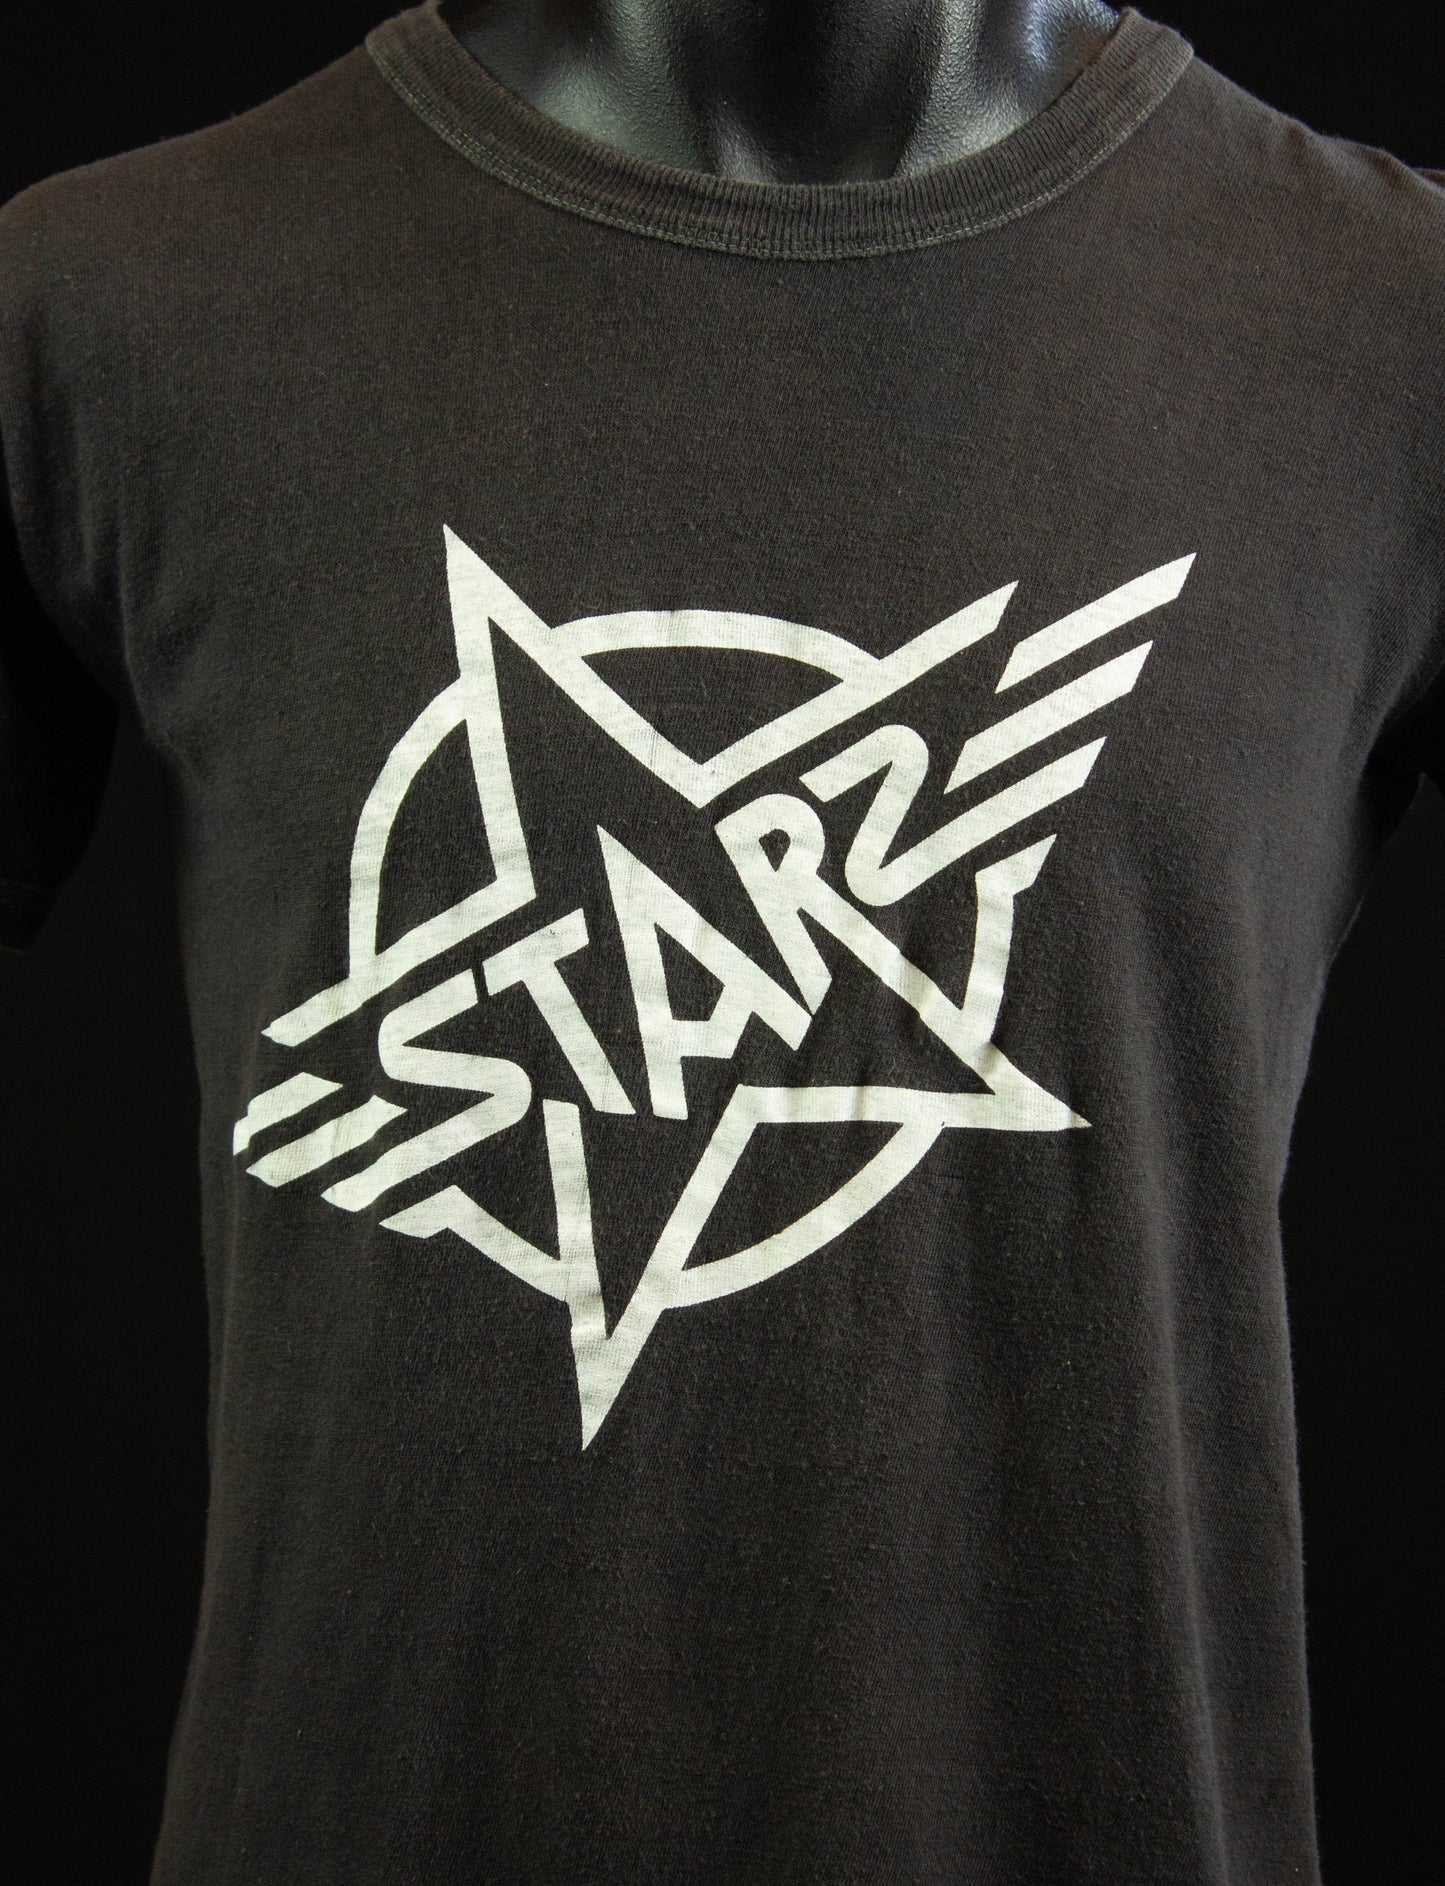 Vintage Starz Concert T Shirt 70s Logo Black and White Medium